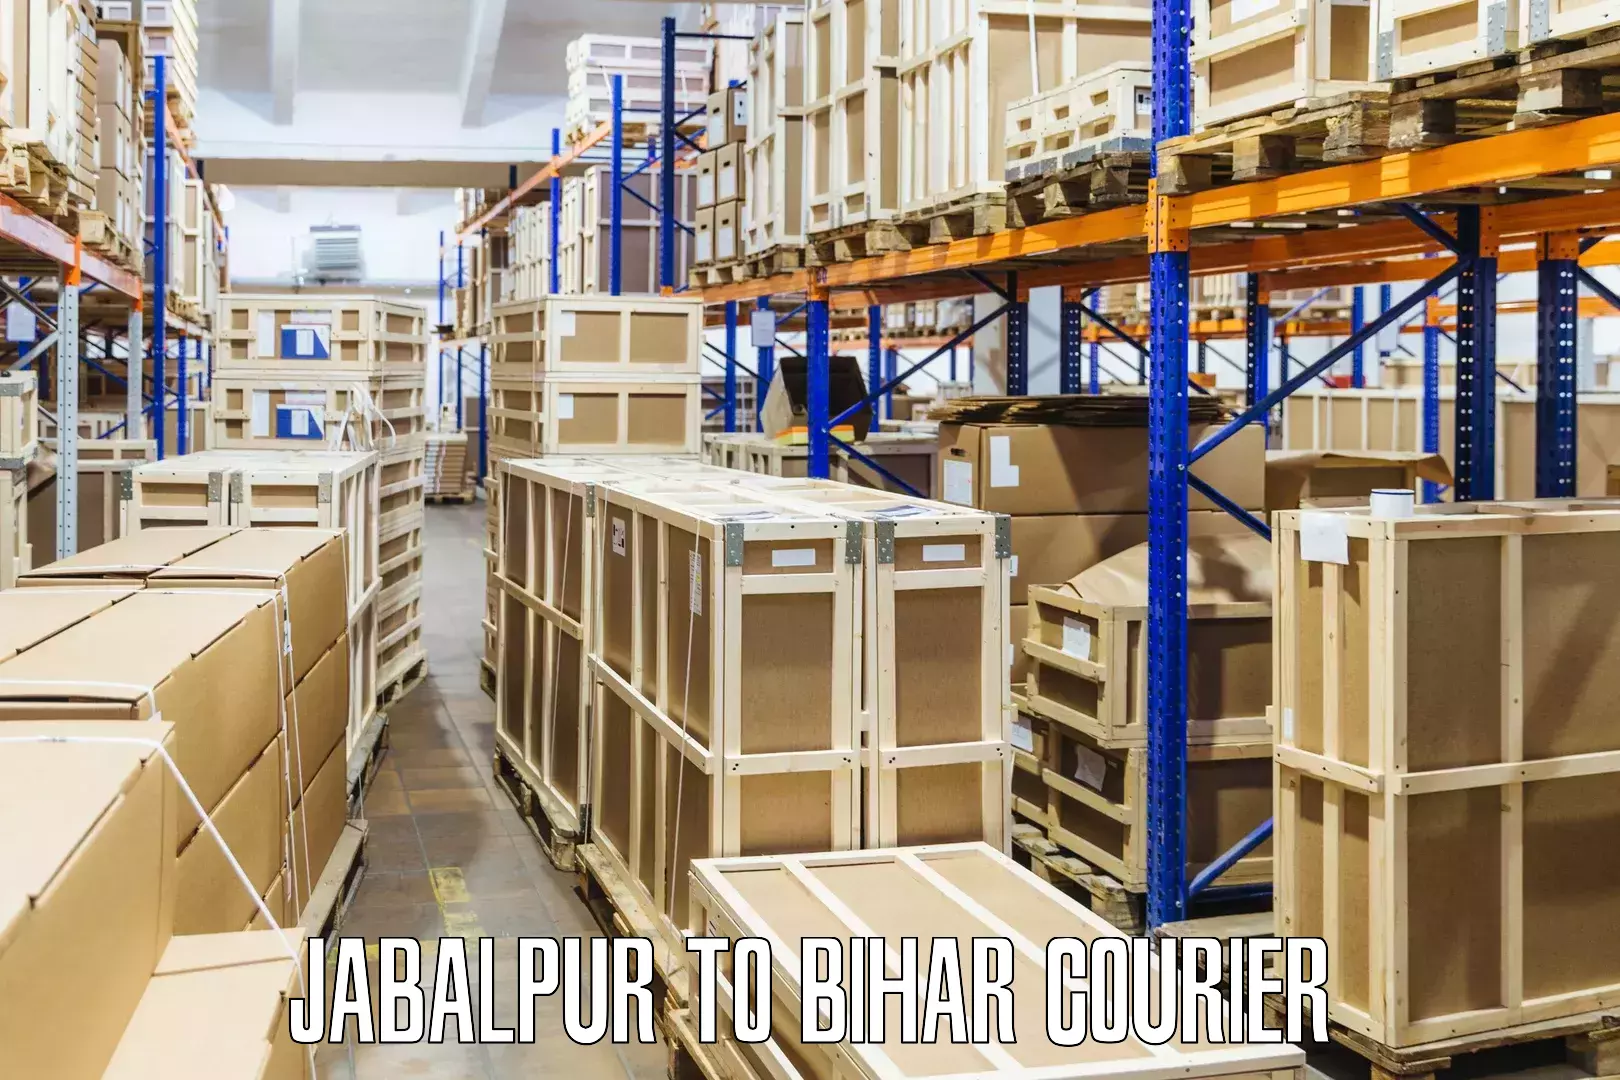 User-friendly courier app Jabalpur to Bihar